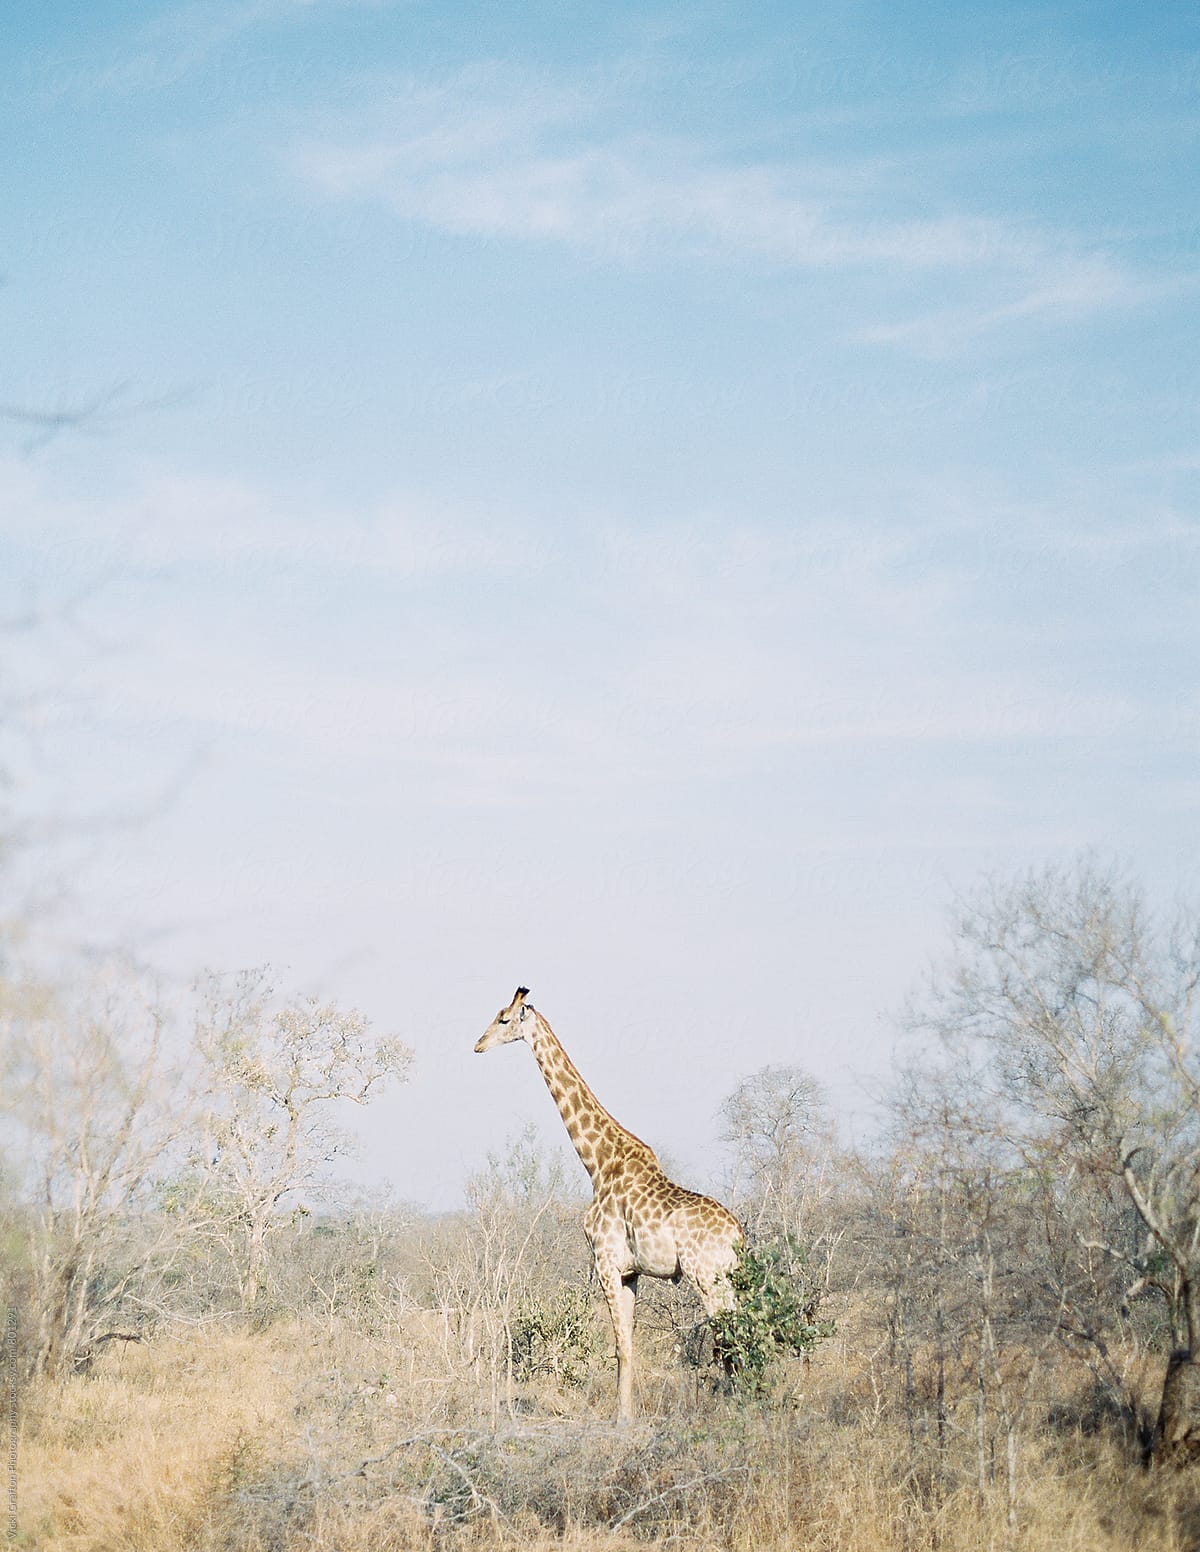 Giraffe on Safari in South Africa